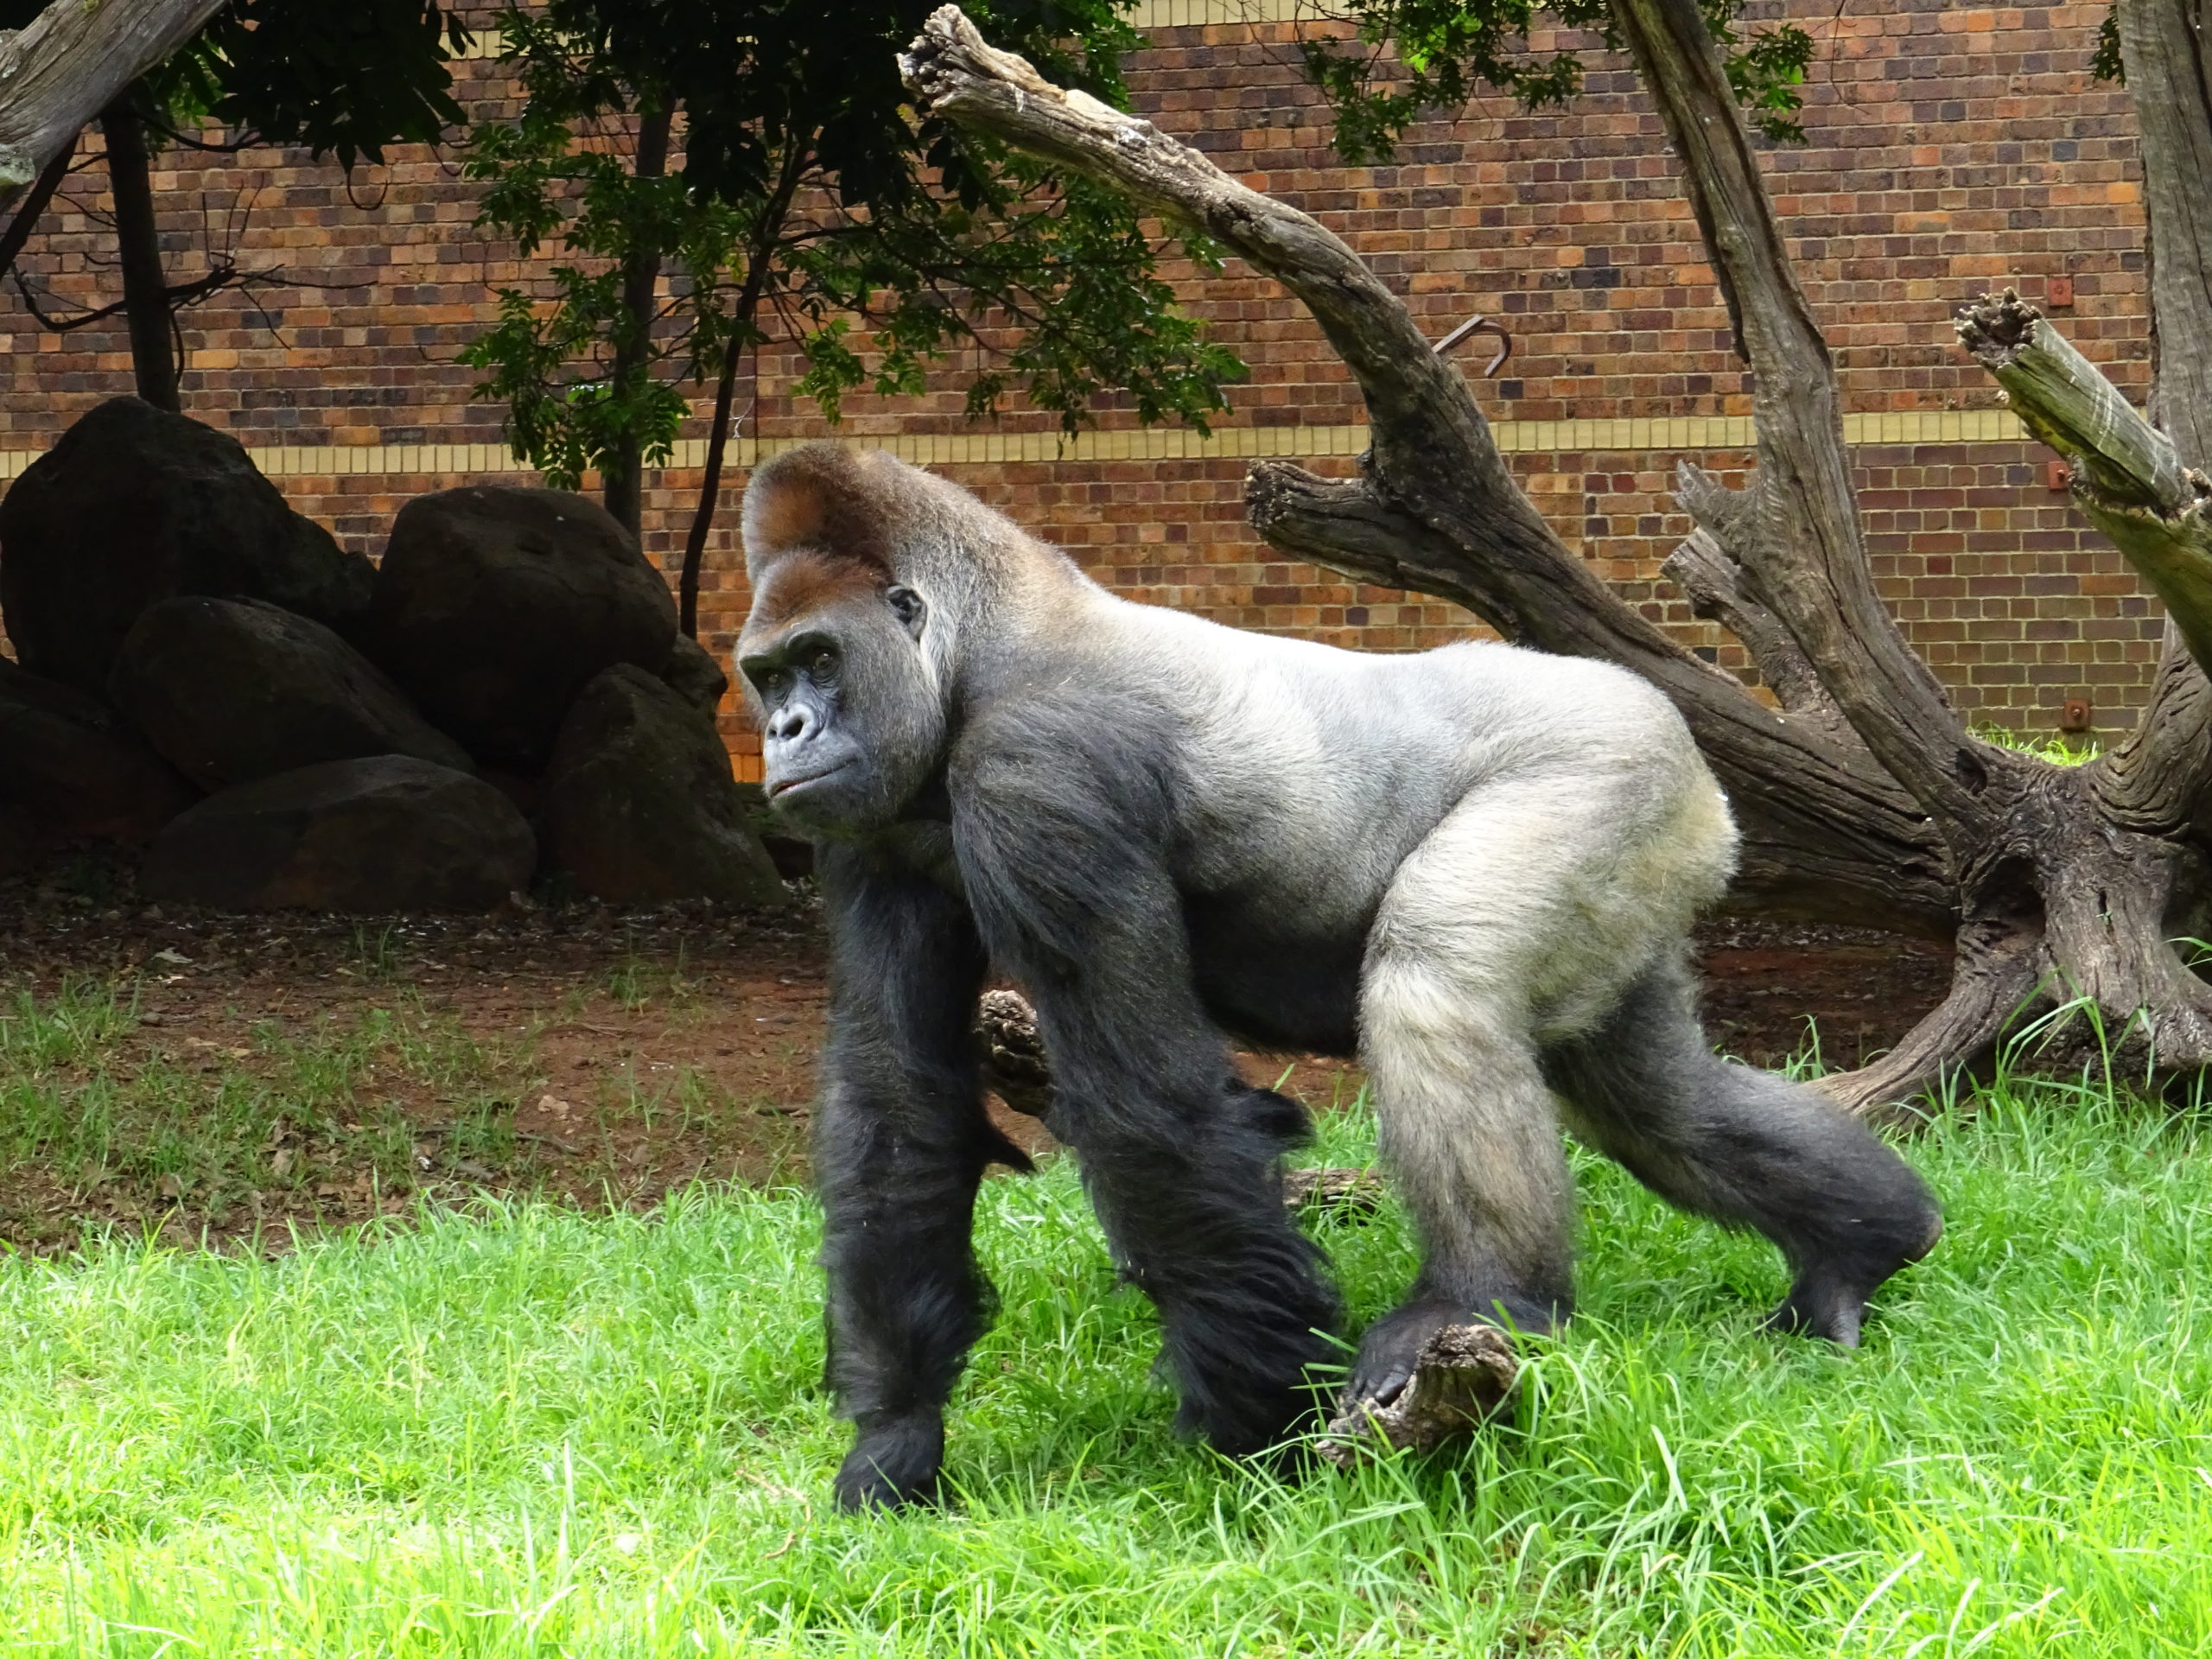 Makokou the gorilla’s historic surgery shared in new documentary